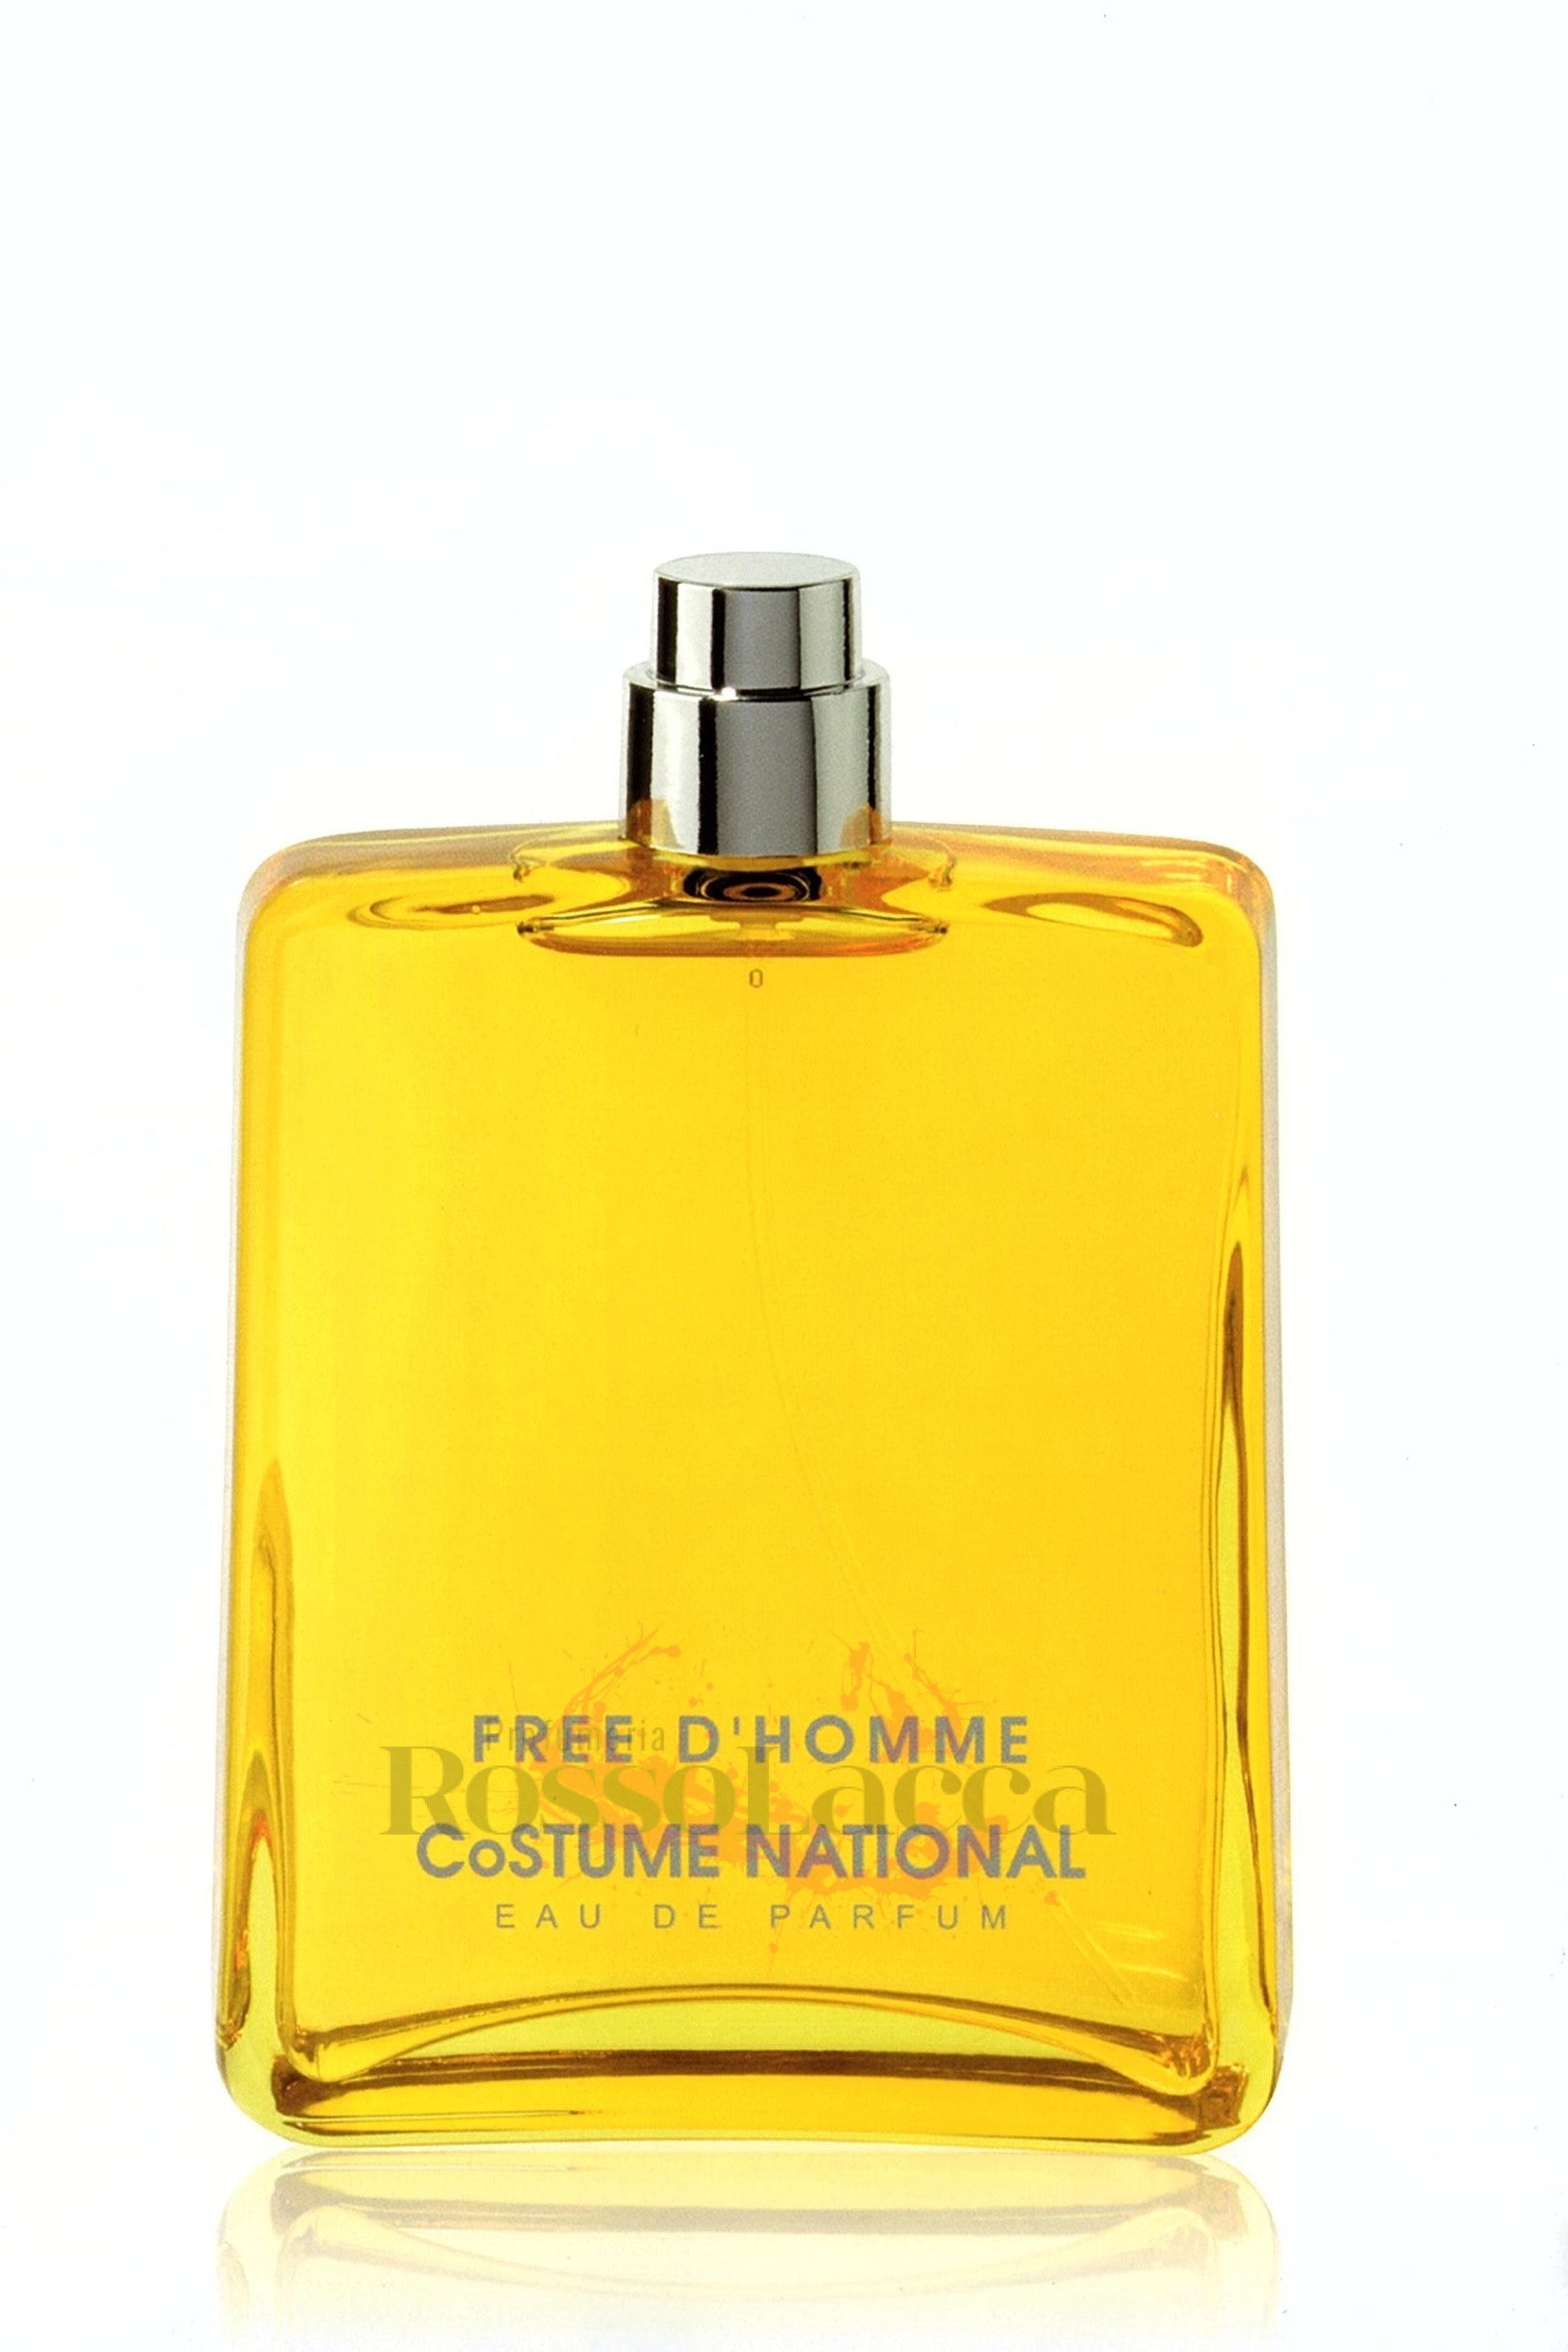 Costume National Free d'Homme Eau de Parfum Uomo - RossoLaccaStore